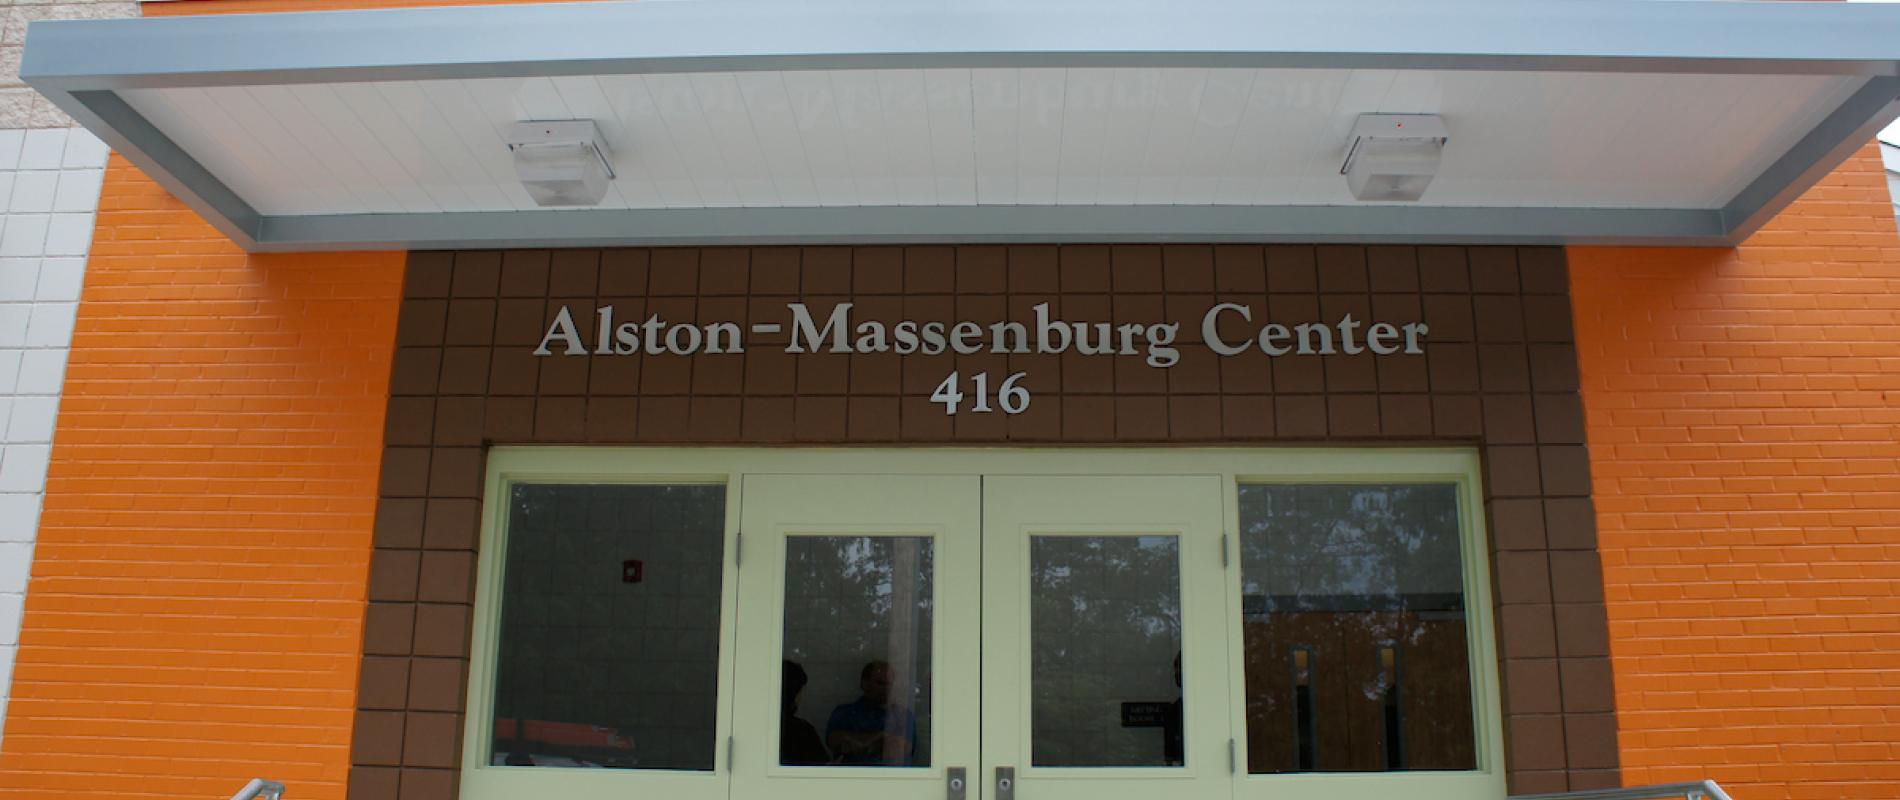 Alston-Massenburg Center entrance